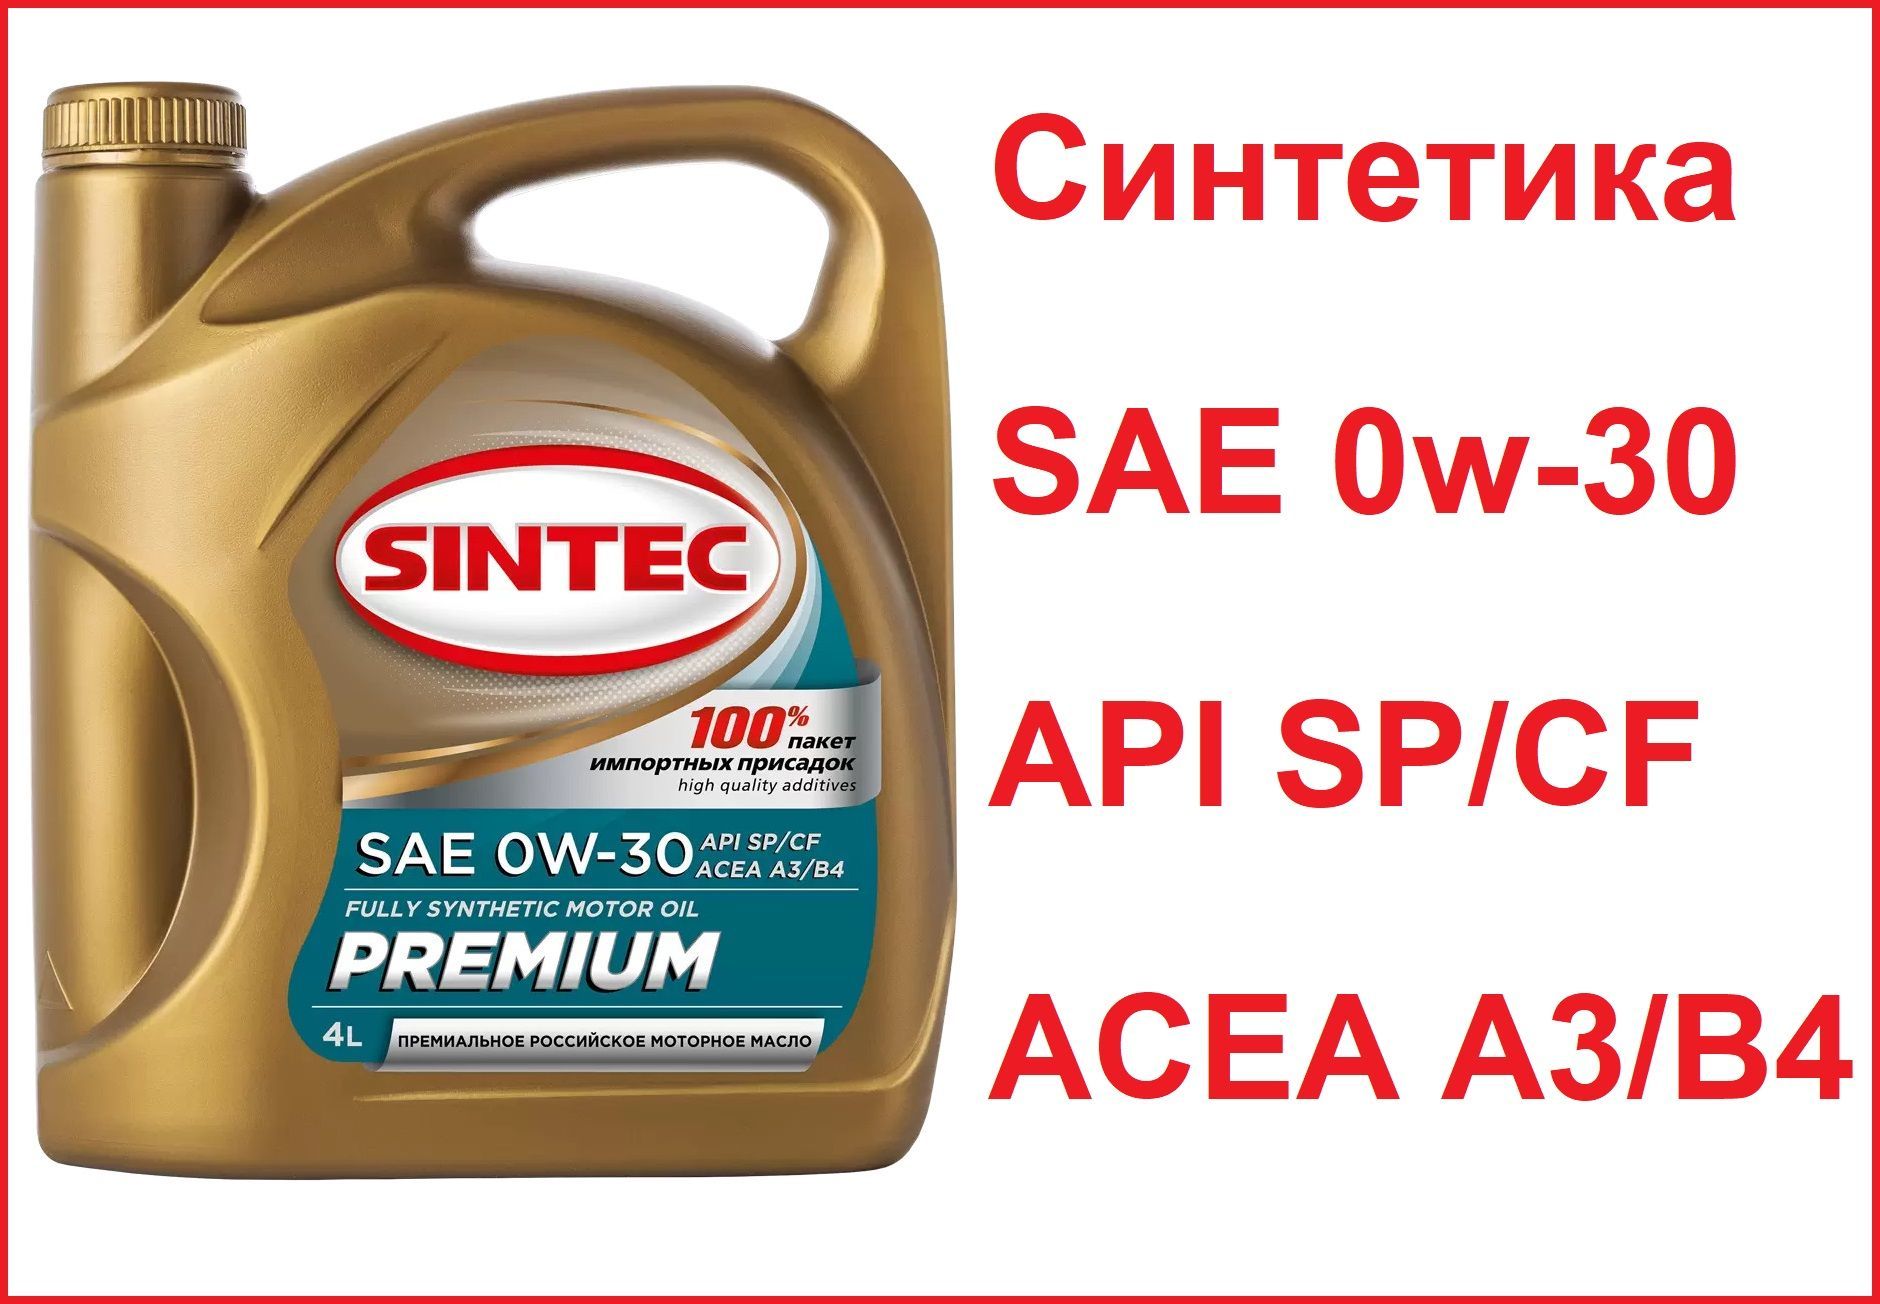 Sintec Premium SAE 5w-30 ACEA a3/b4, 1l. Моторное масло Sintec Racing SAE 10w-60 API SN/CF ACEA a3/b4. Sintec Premium 9000 SAE 5w-40 ACEA a3/b4 API SN/CF. 5/30 Sintec премиум 9000 4л. Синт. ACEA c3 масло моторное акция 4+1.